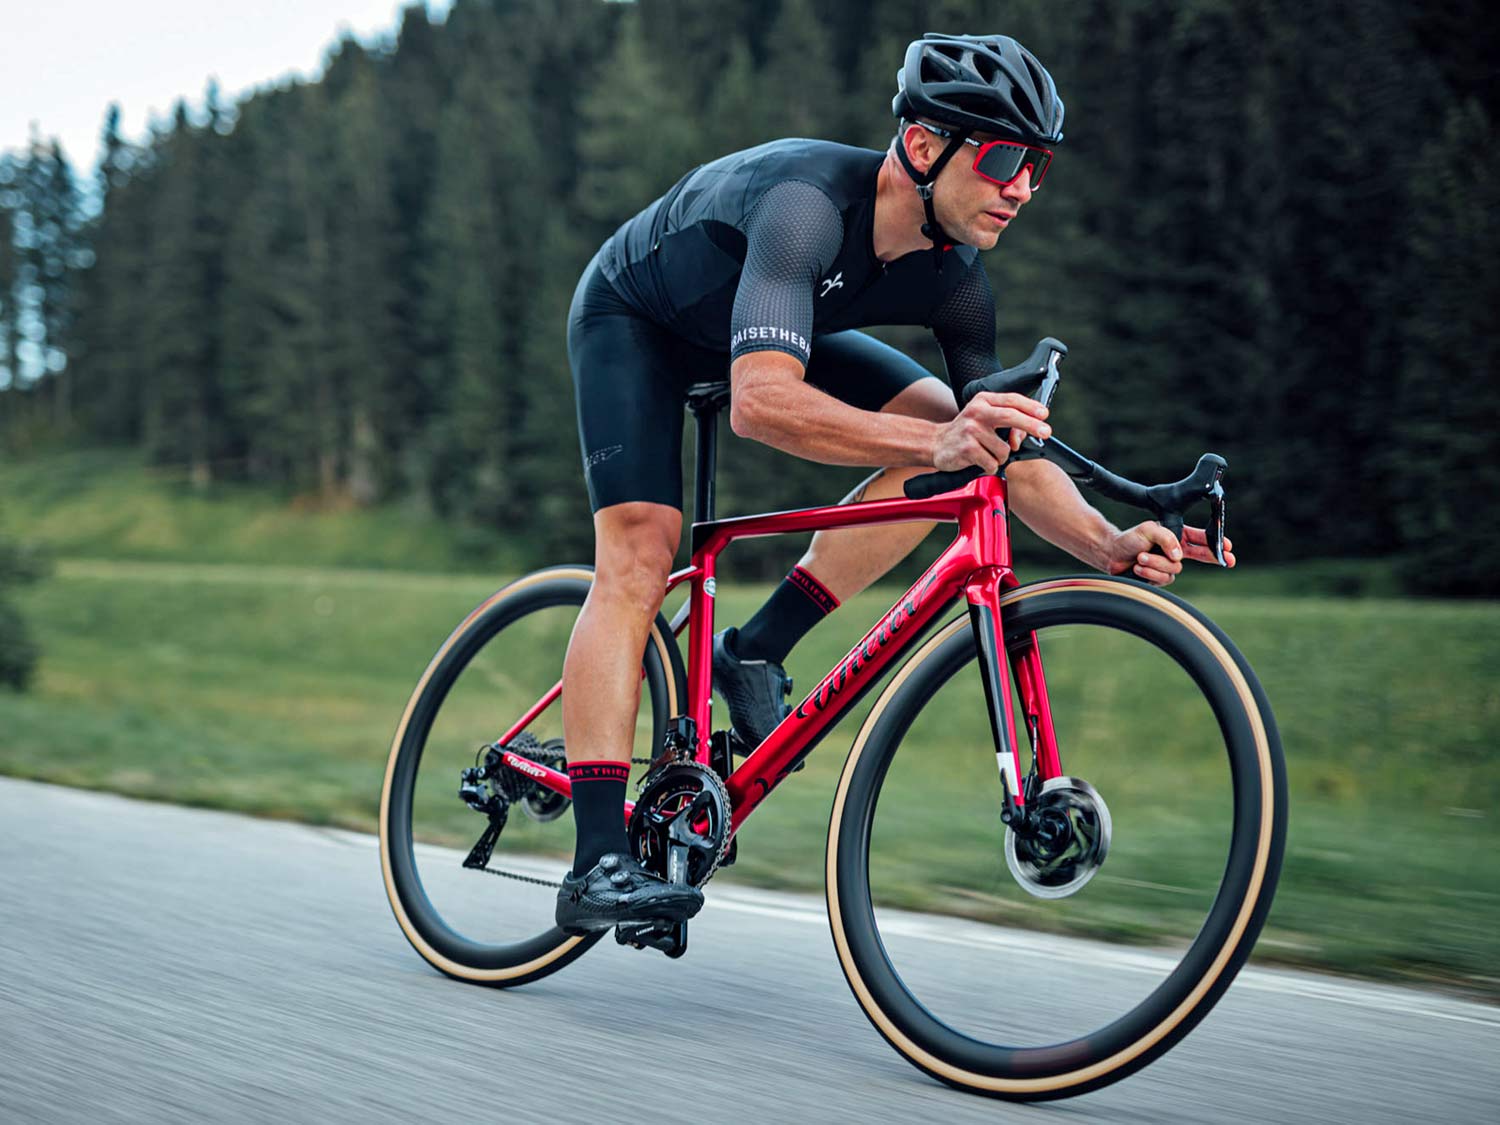 Wilier Filante SLR aero road bike, pro lightweight all-rounder carbon aero road race bike, riding blur